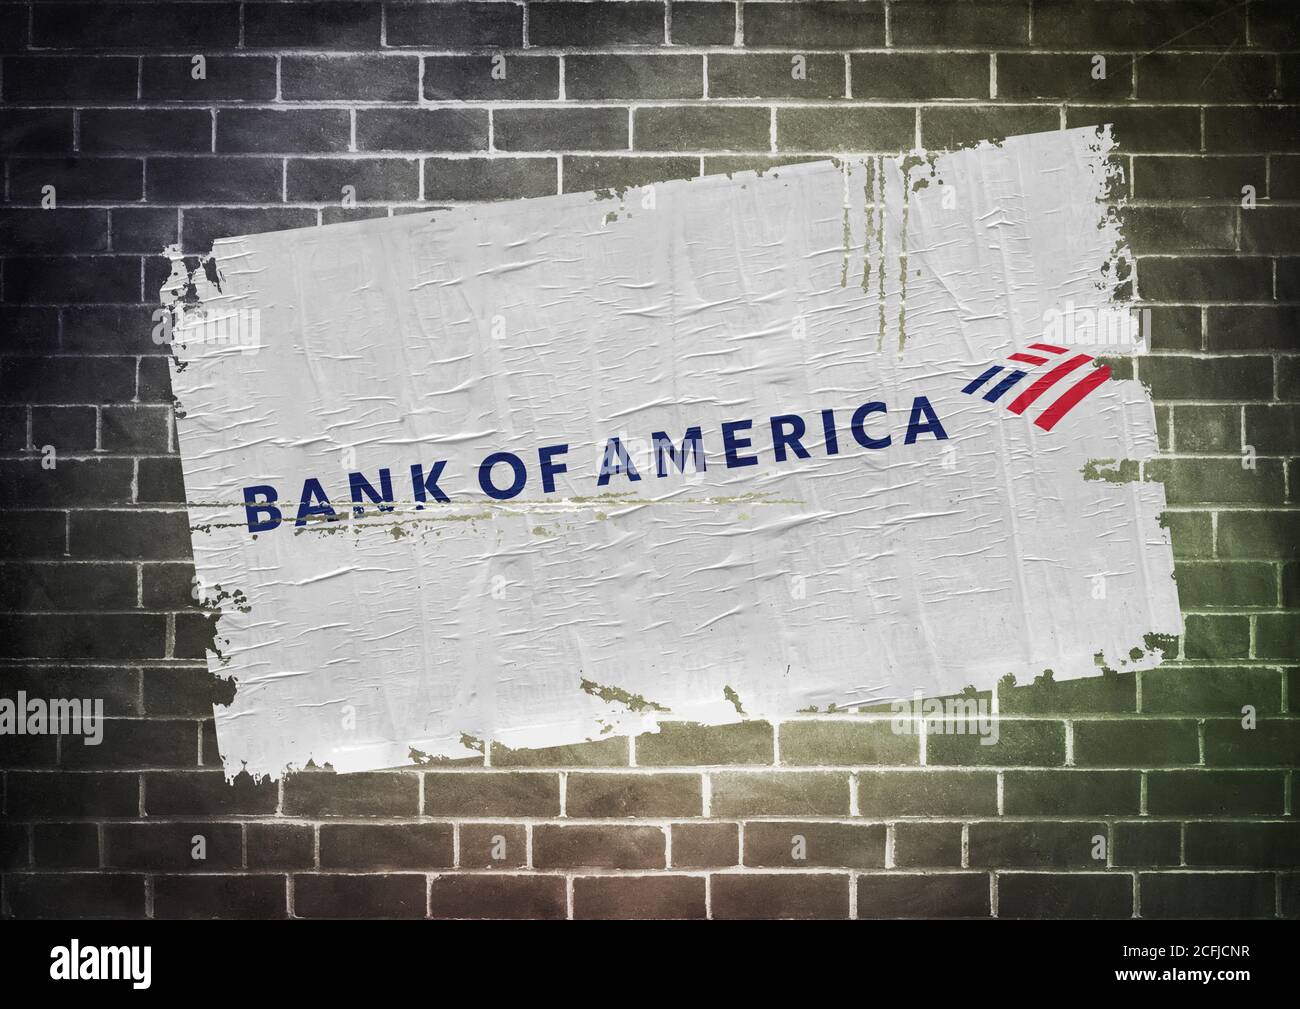 Bank of America Stockfoto